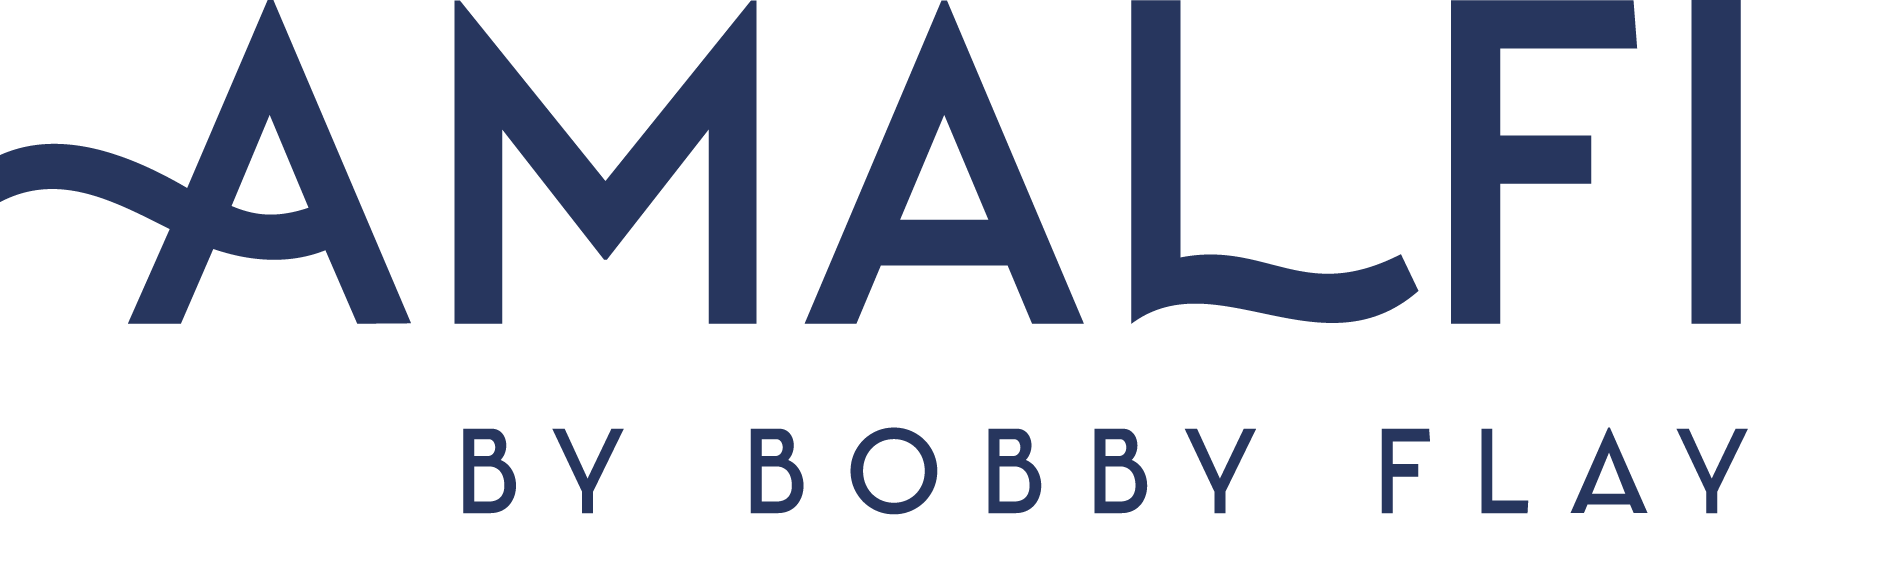 Amalfi logo